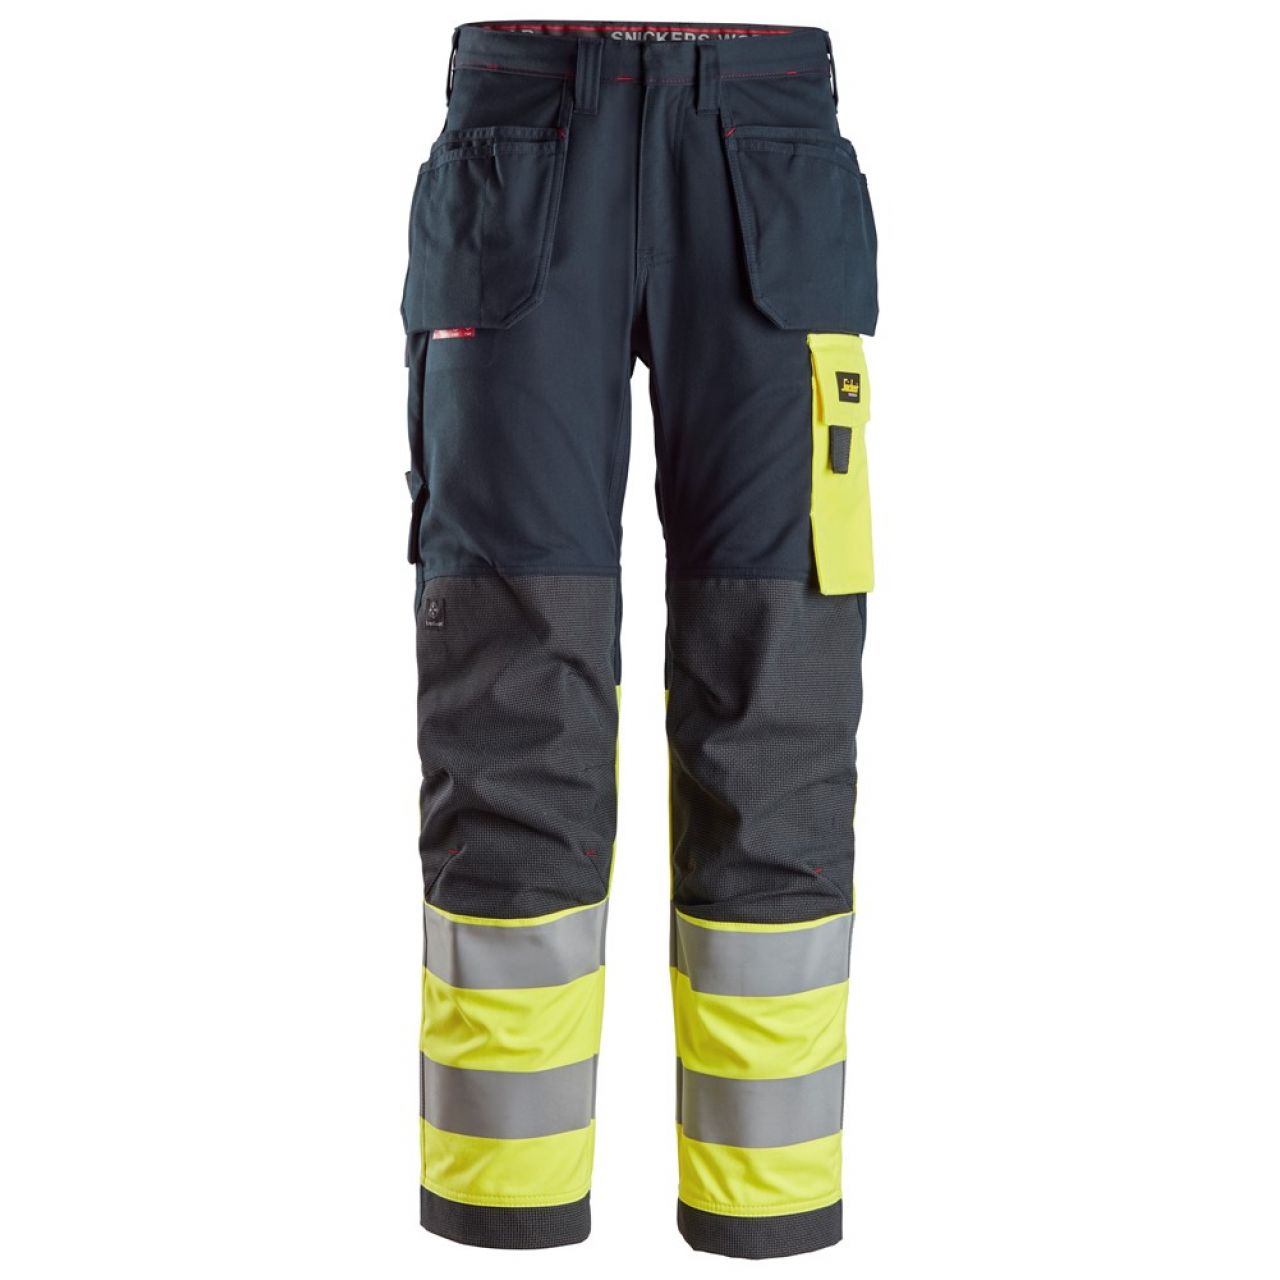 6276 Pantalones largos de trabajo de alta visibilidad clase 1 con bolsillos flotantes ProtecWork azul marino-amarillo talla 96